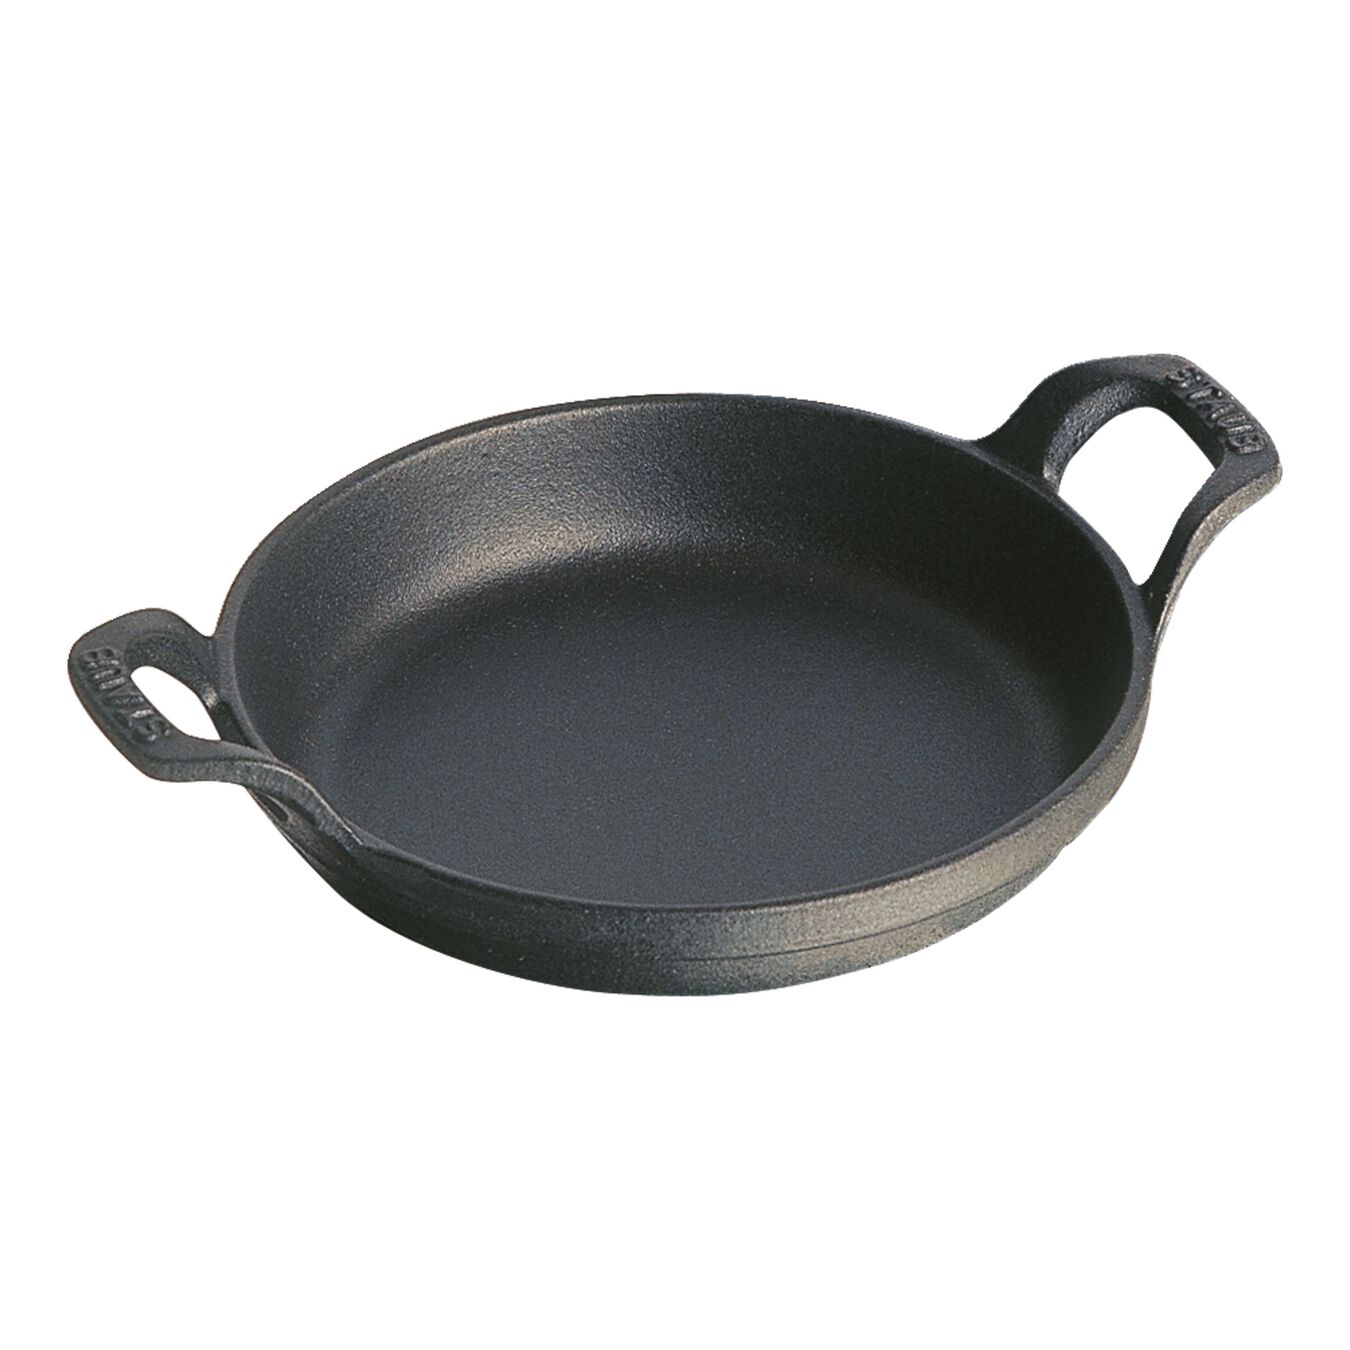  cast iron round Oven dish, black,,large 1